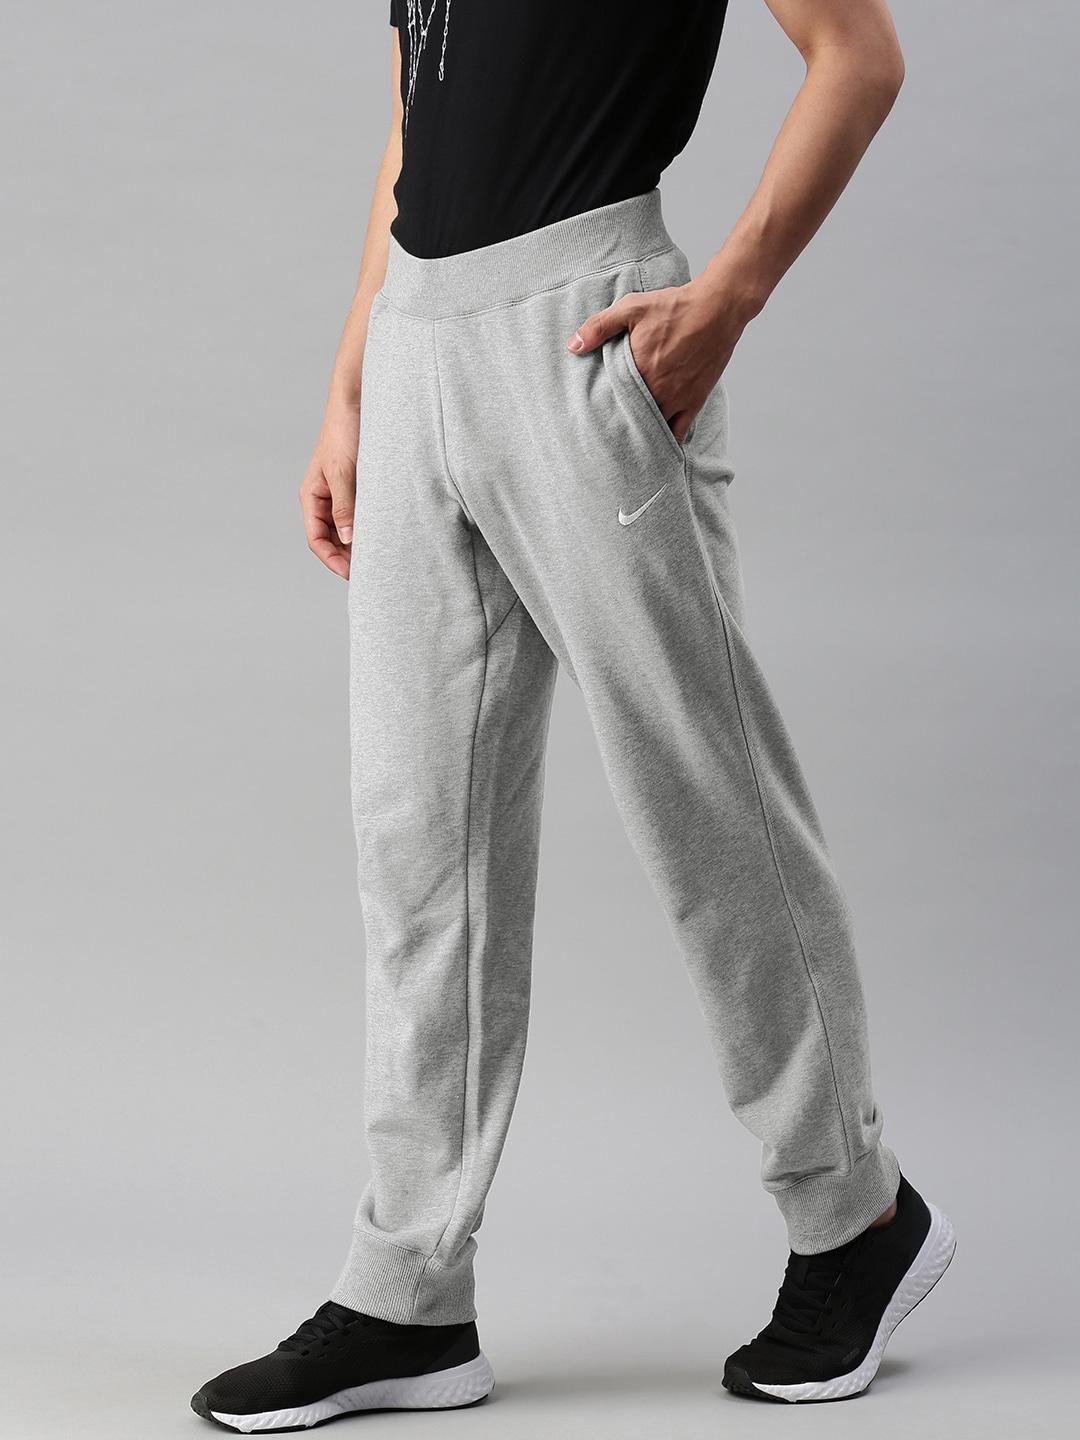 nike-men-grey-melange-solid-straight-fit-trousers